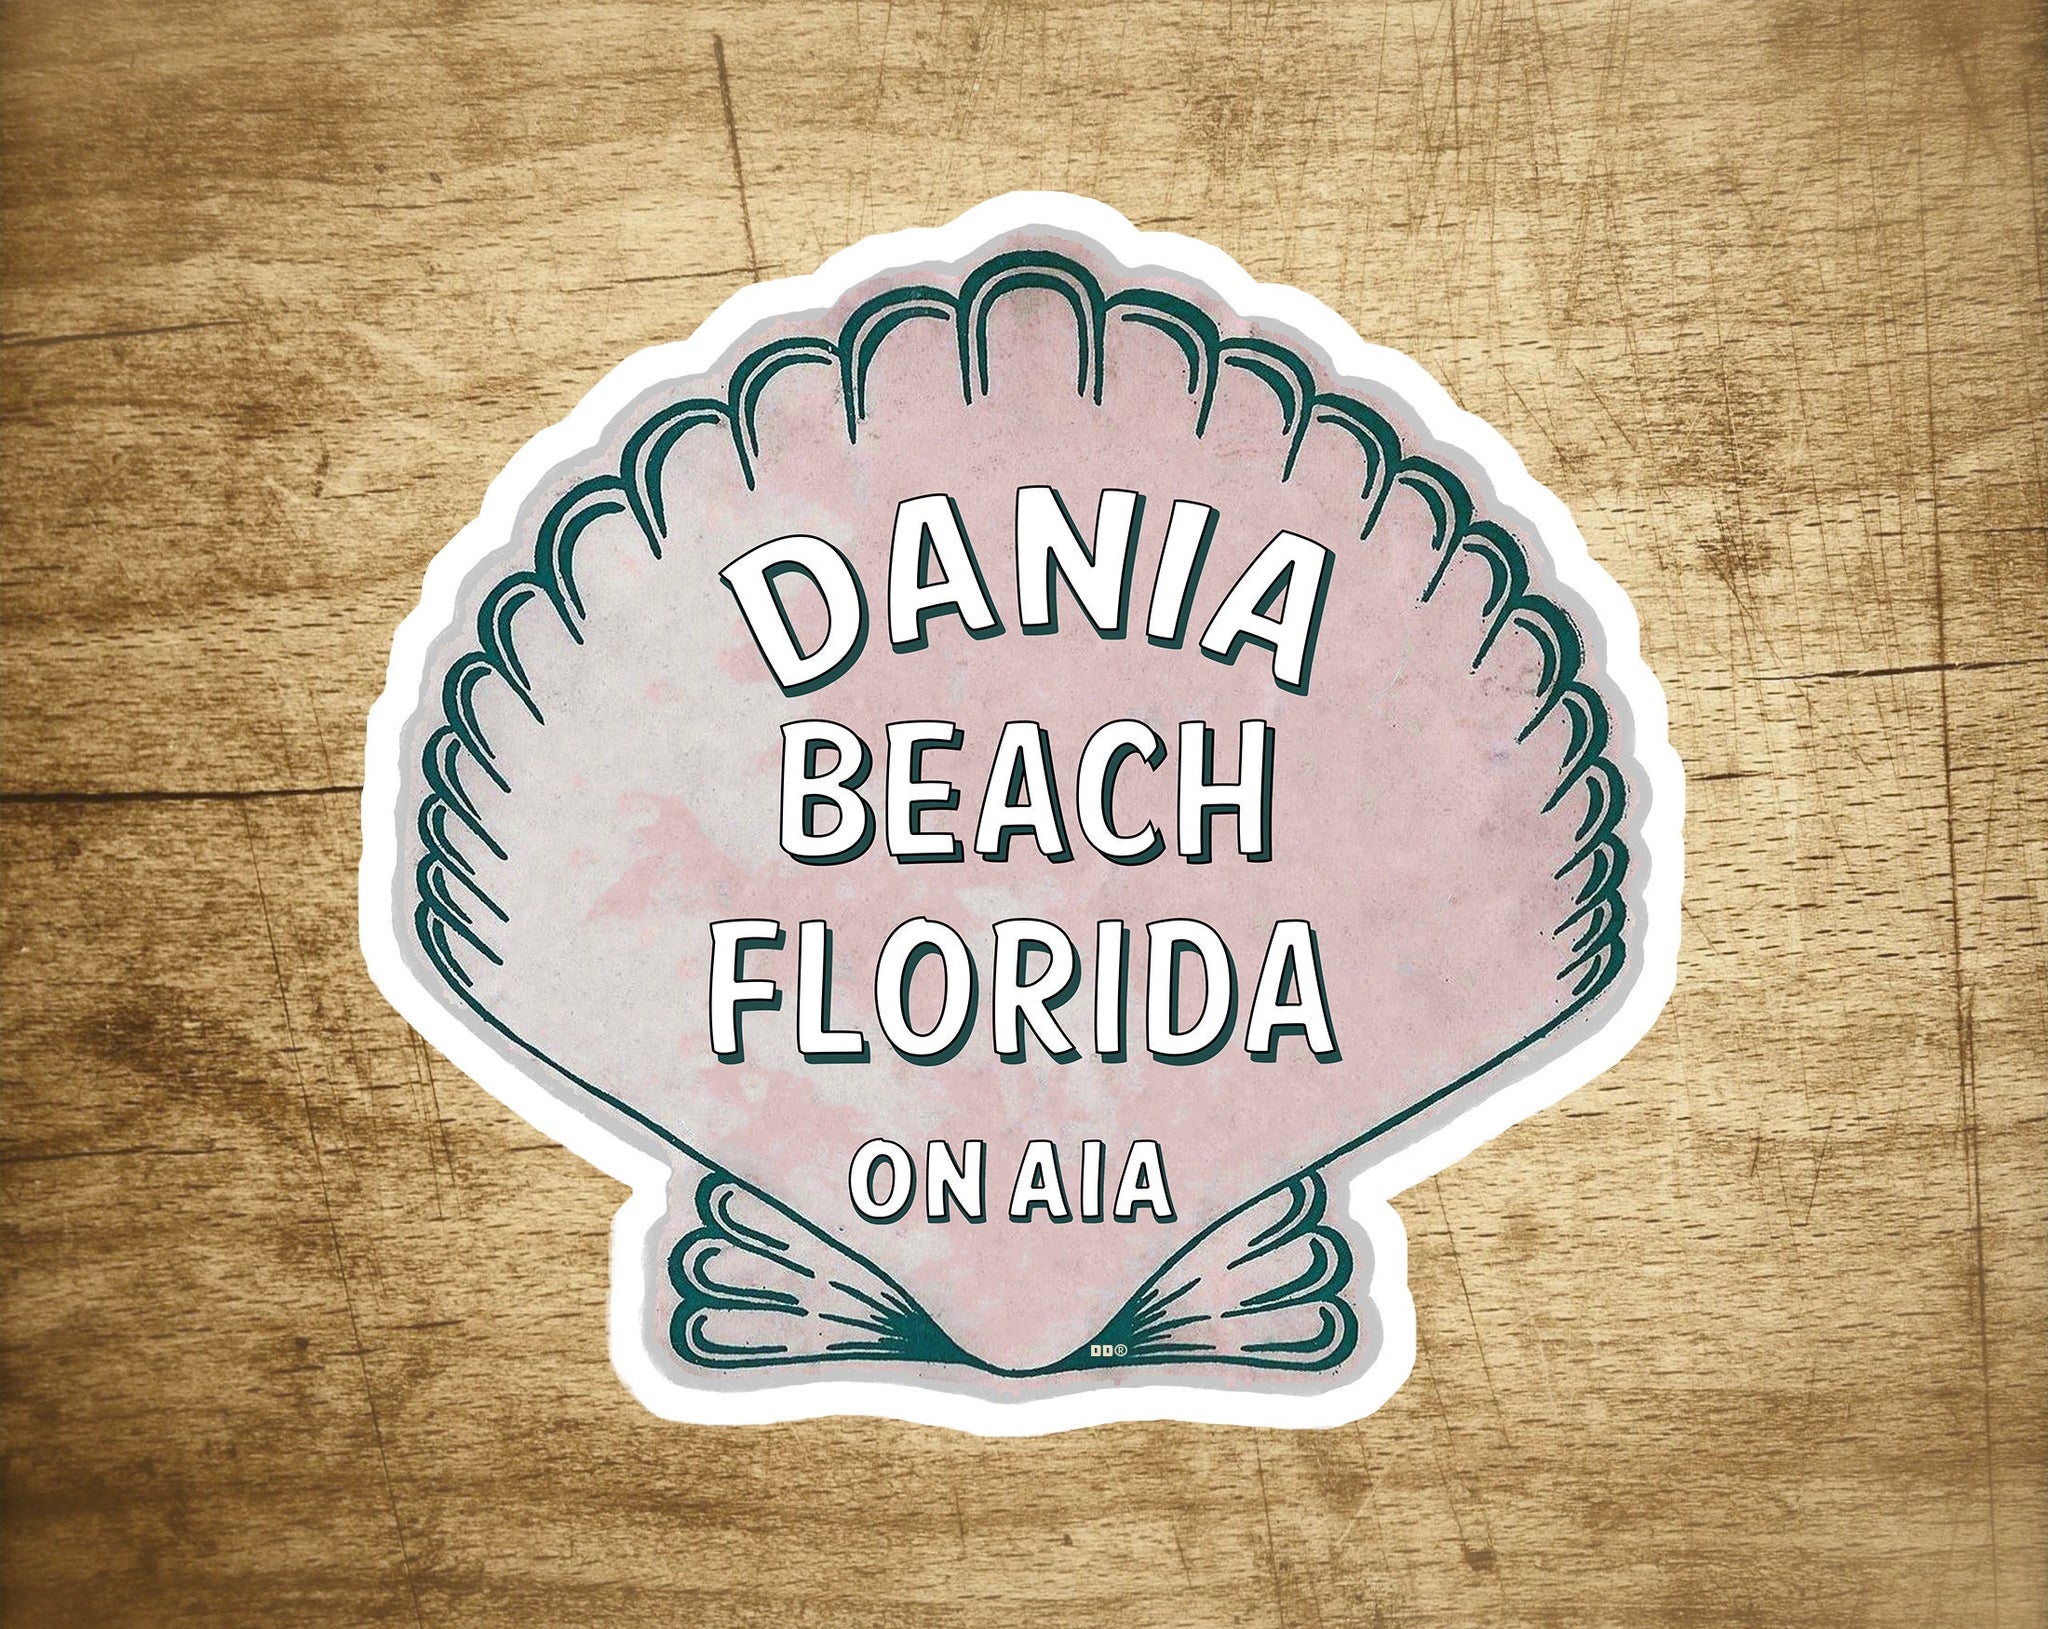 Dania Beach Florida 3" Sticker Decal Shell Vintage Laptop Bumper Truck Car